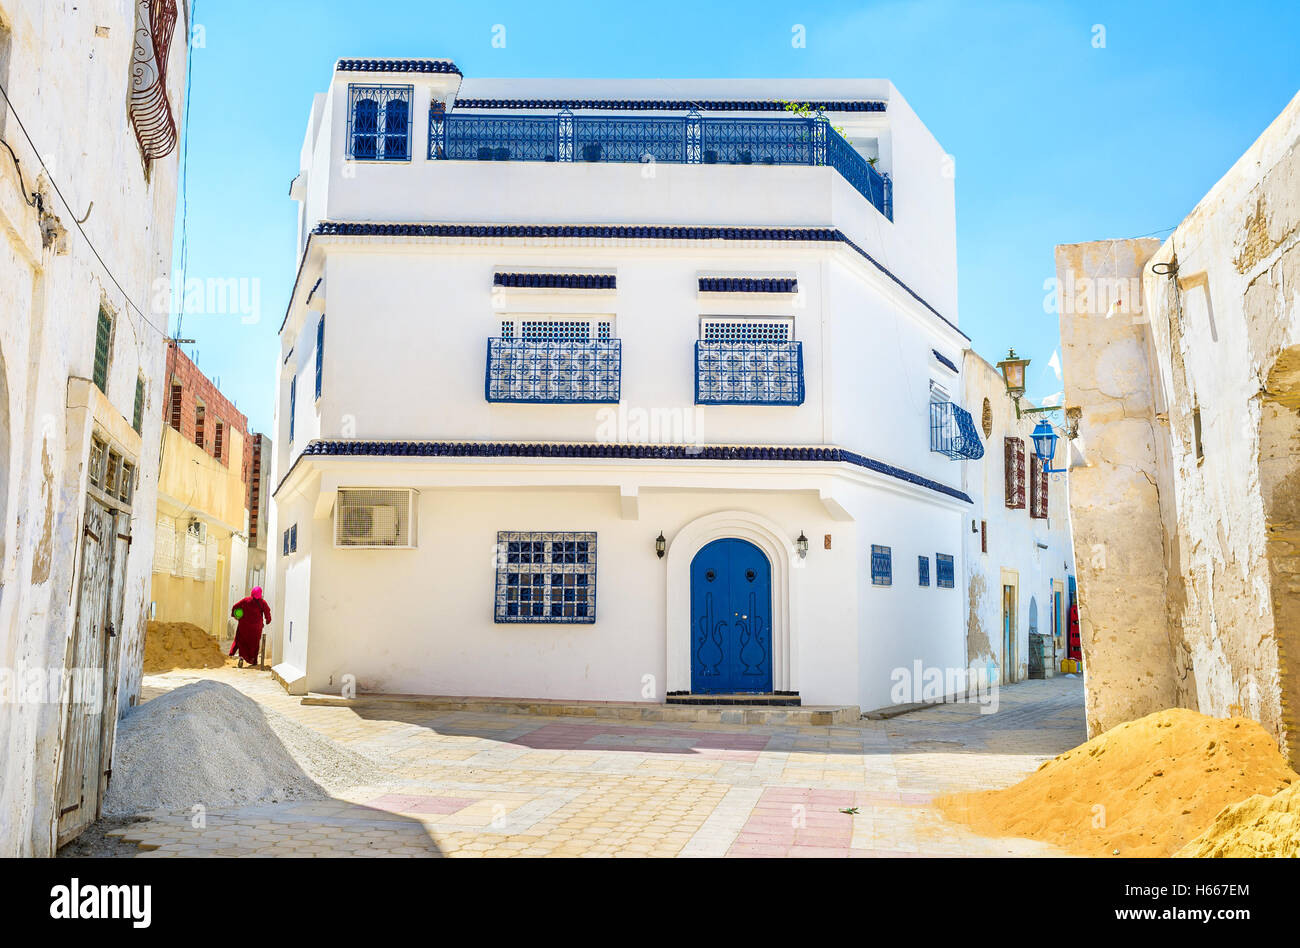 Das große Haus, wie bei alten arabischen Medina, an der Kreuzung, Kairouan, Tunesien. Stockfoto